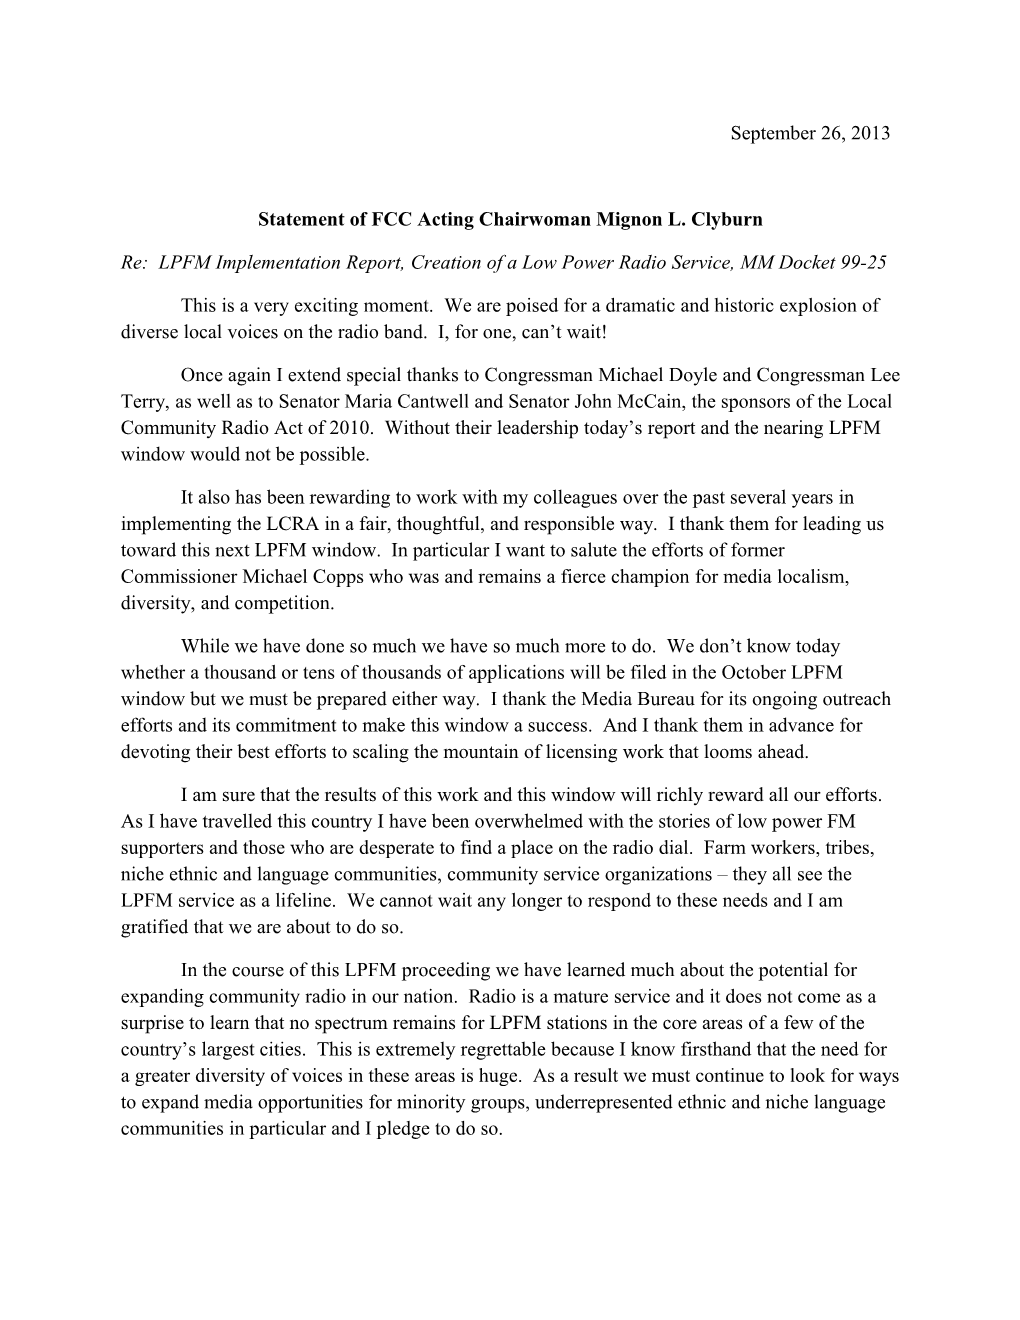 Statement of FCC Acting Chairwoman Mignon L. Clyburn